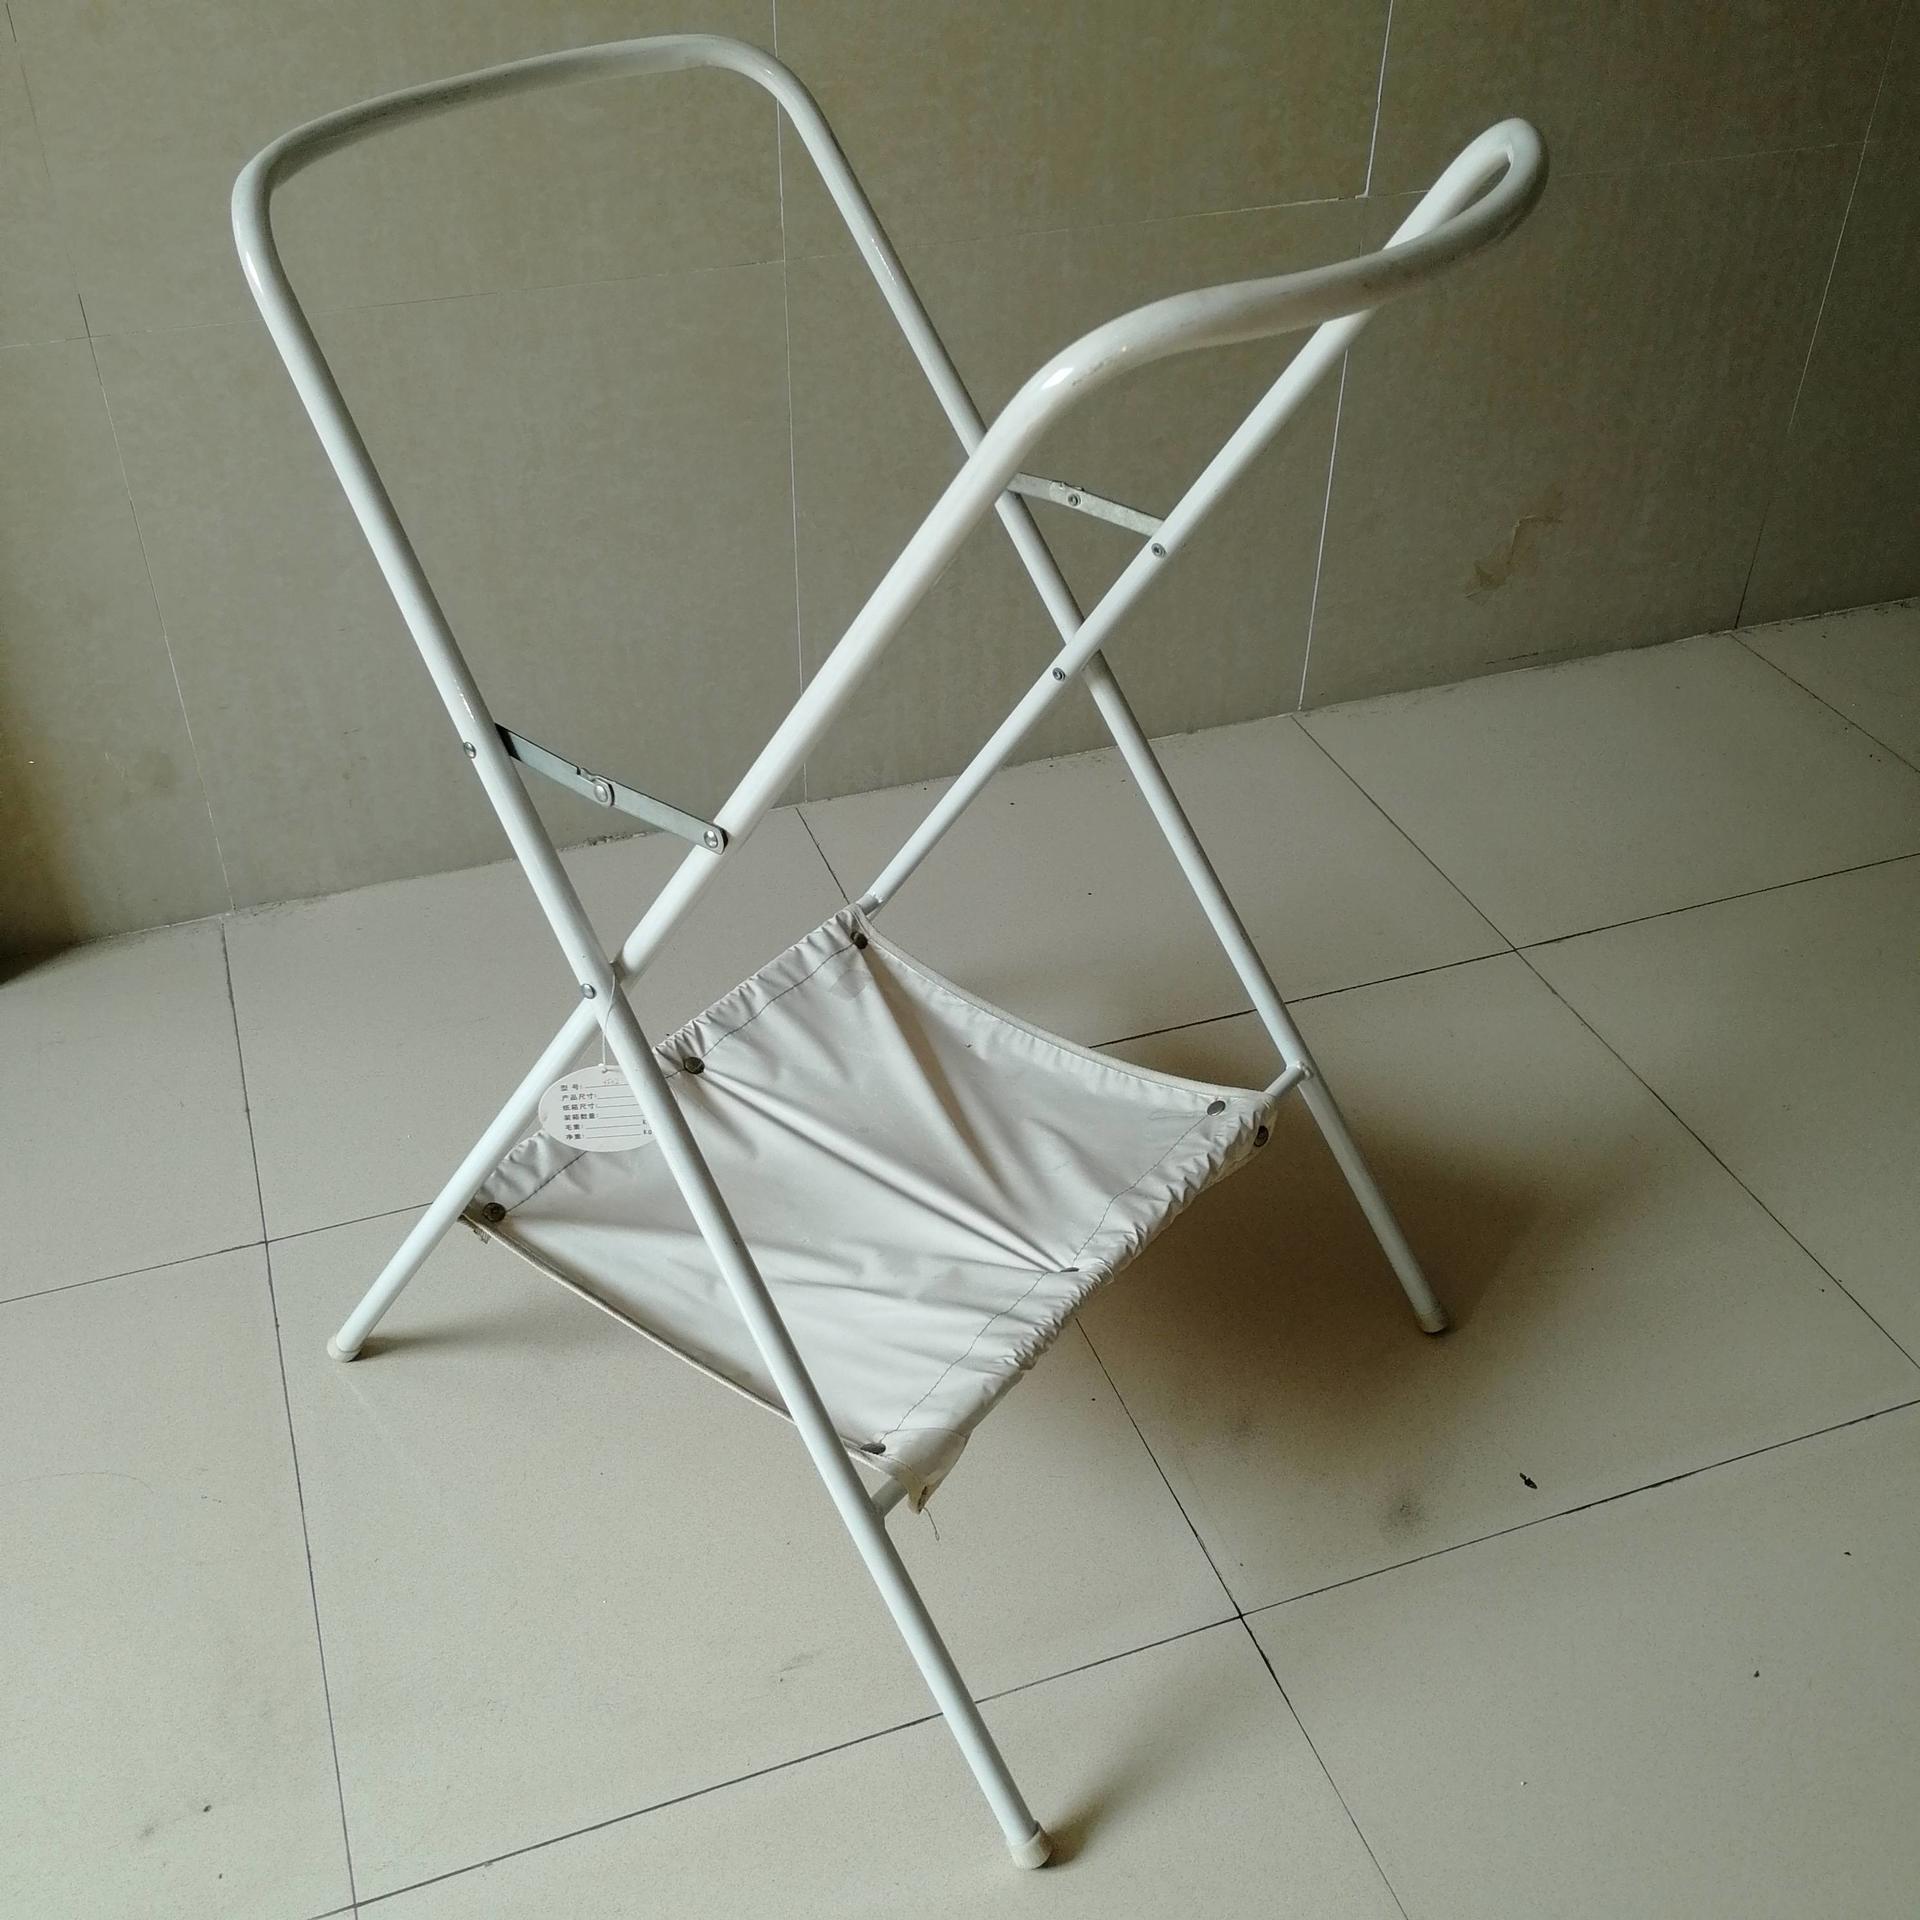 Aoqi folding bath stand factory price for bathroom